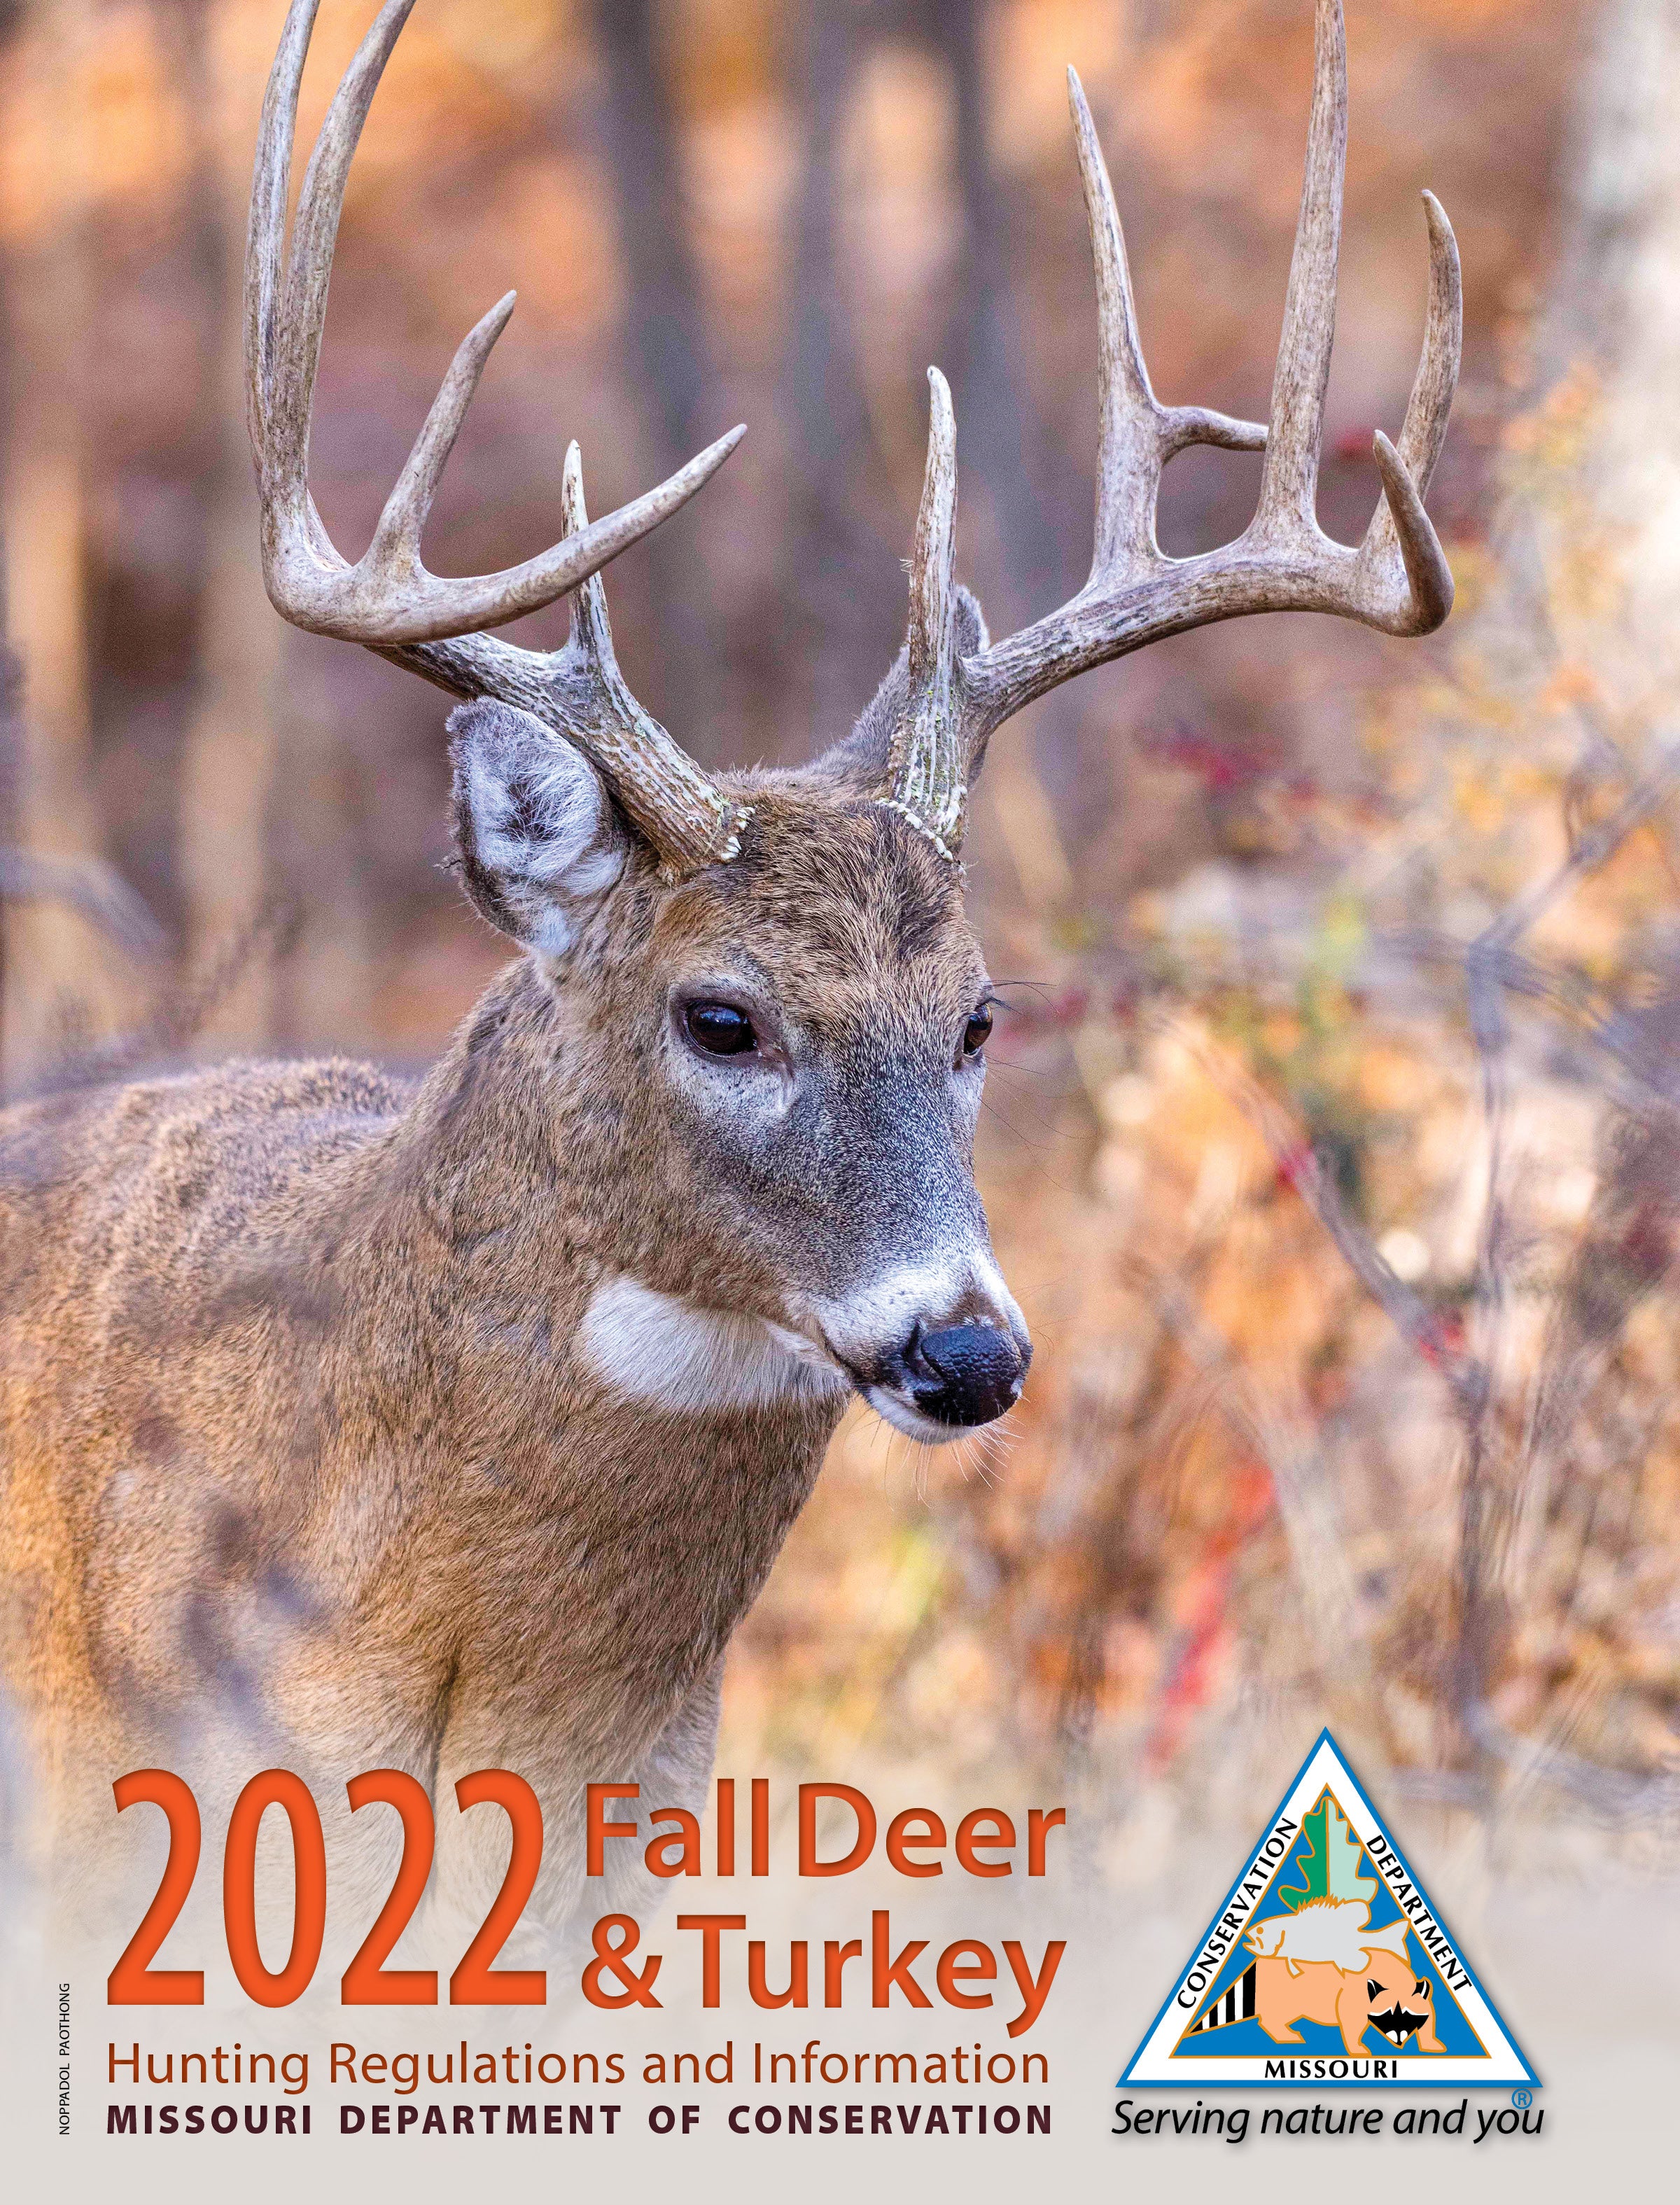 MDC Shares Key Information For Upcoming Deer Season Missouri 